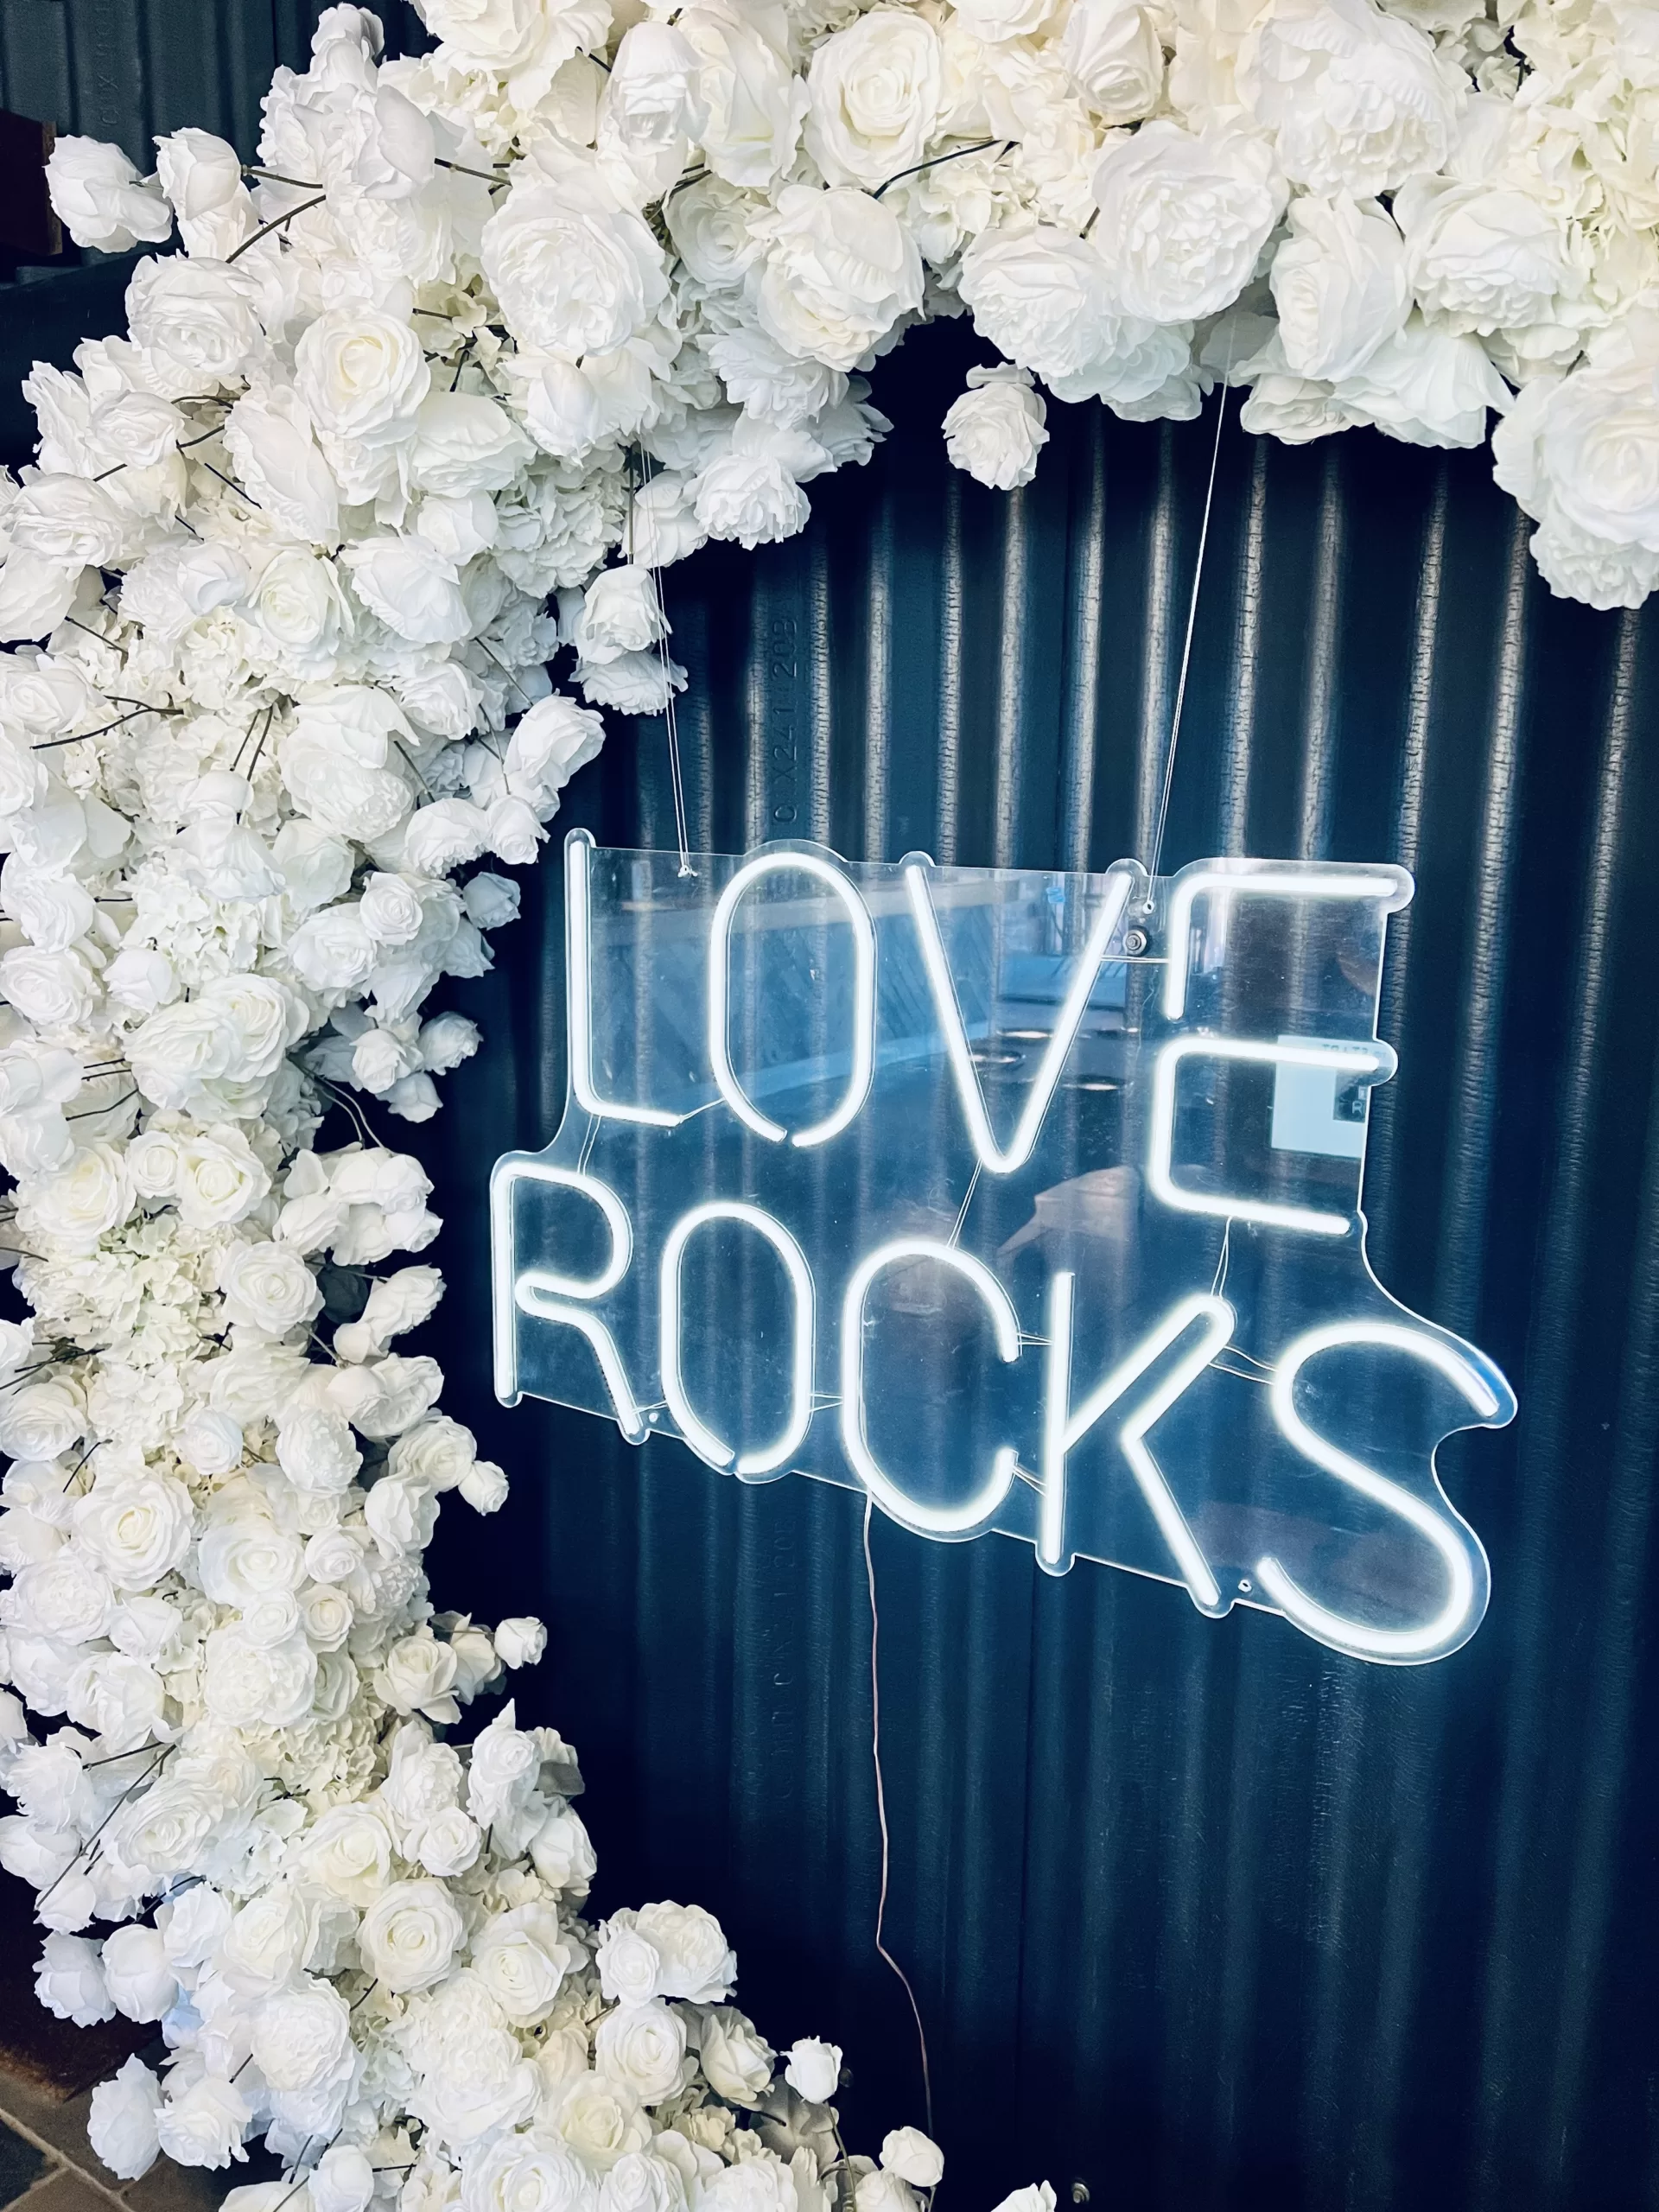 LOVE ROCKS